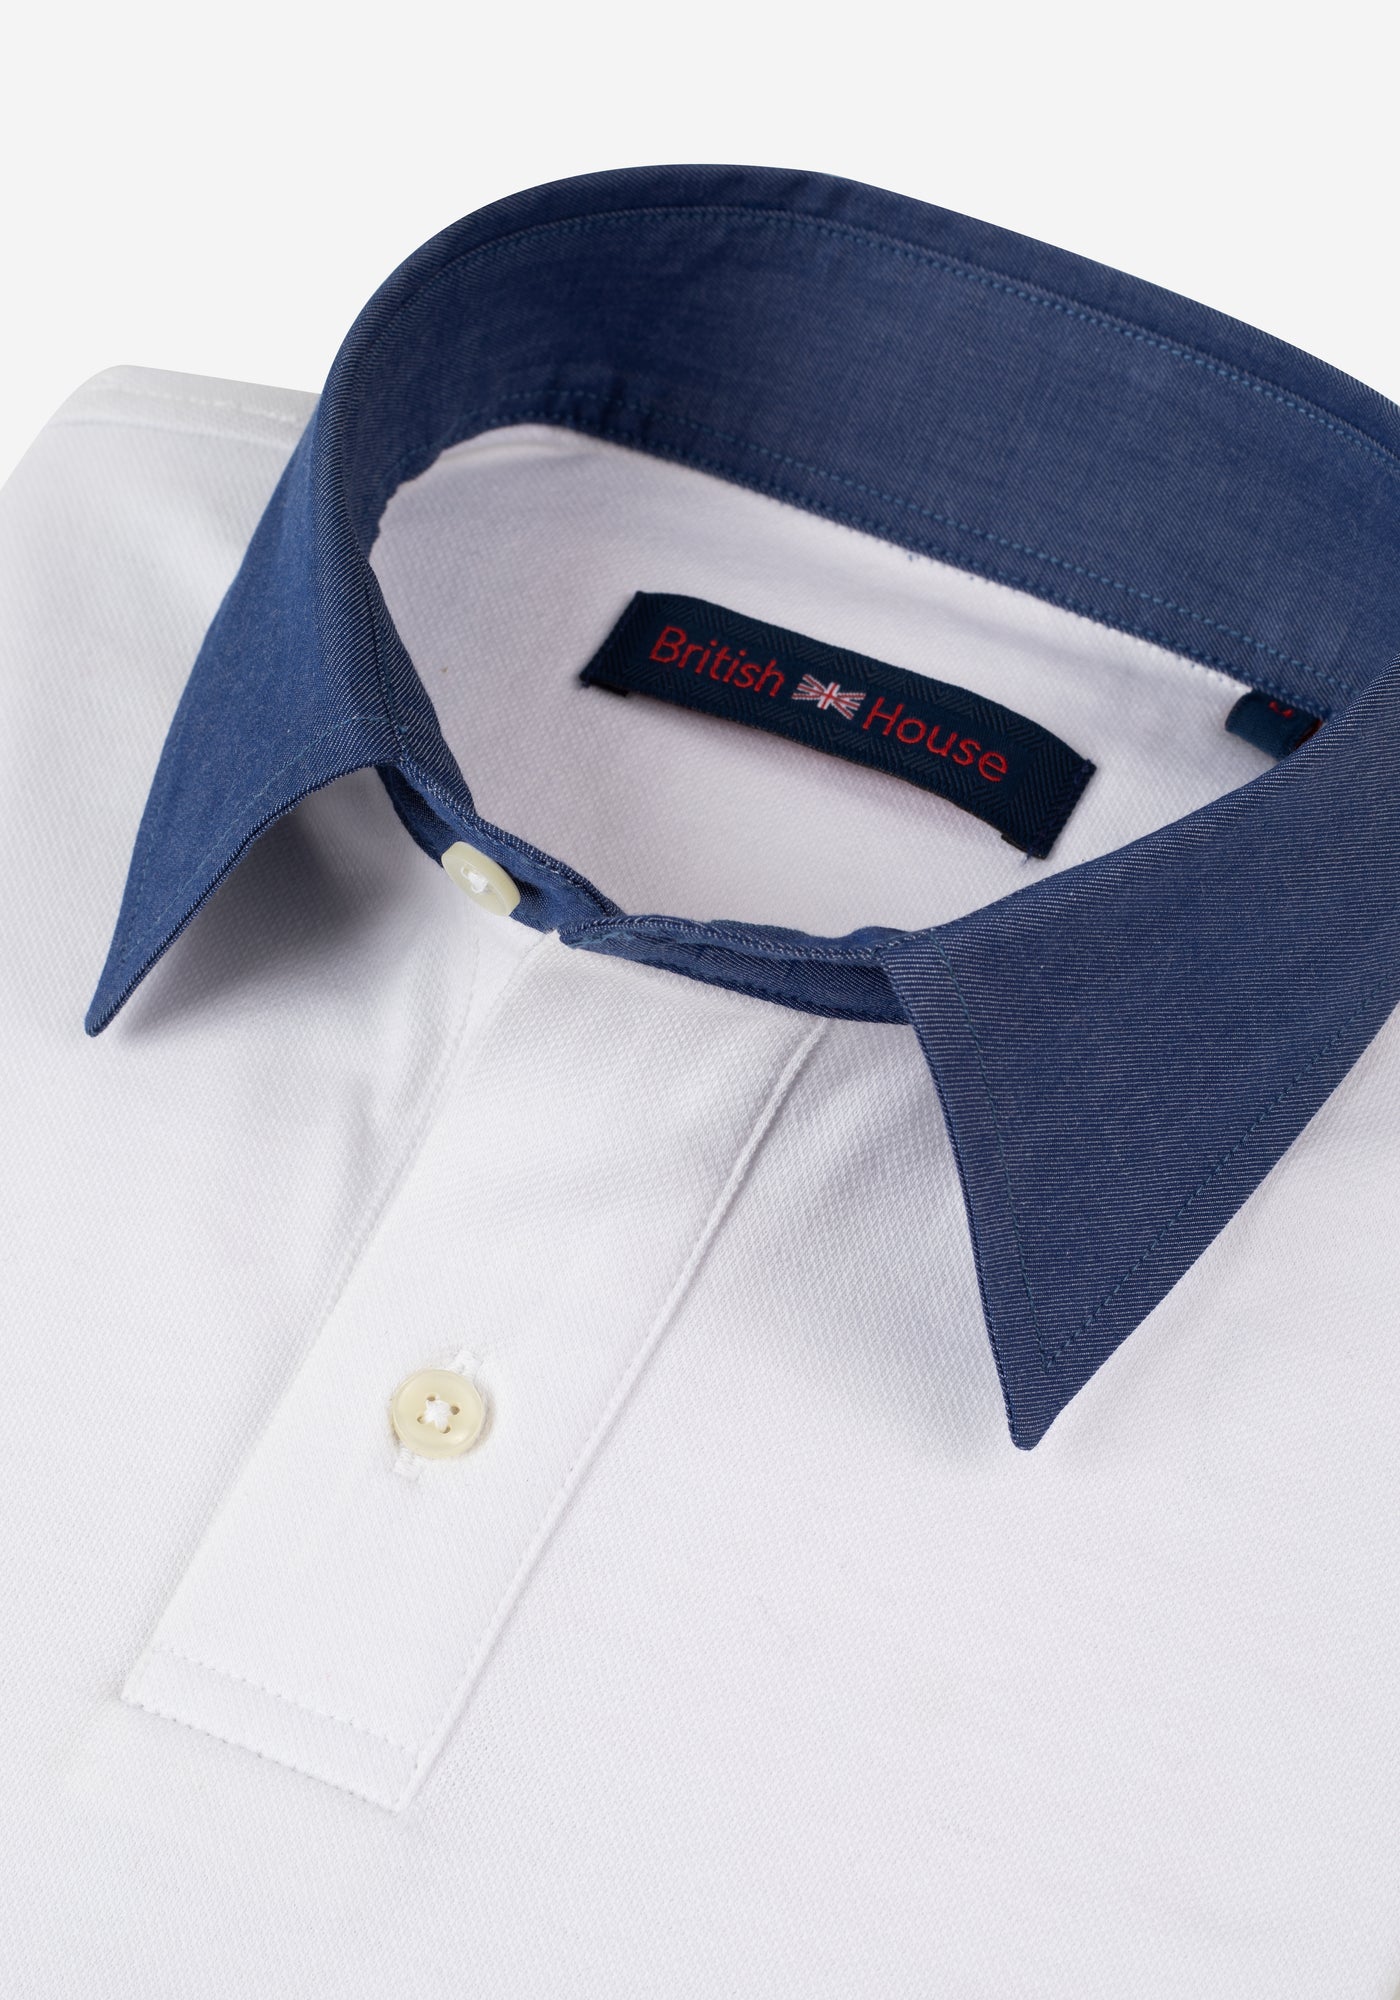 Crystal White Cotton Polo Shirt - Long Sleeve